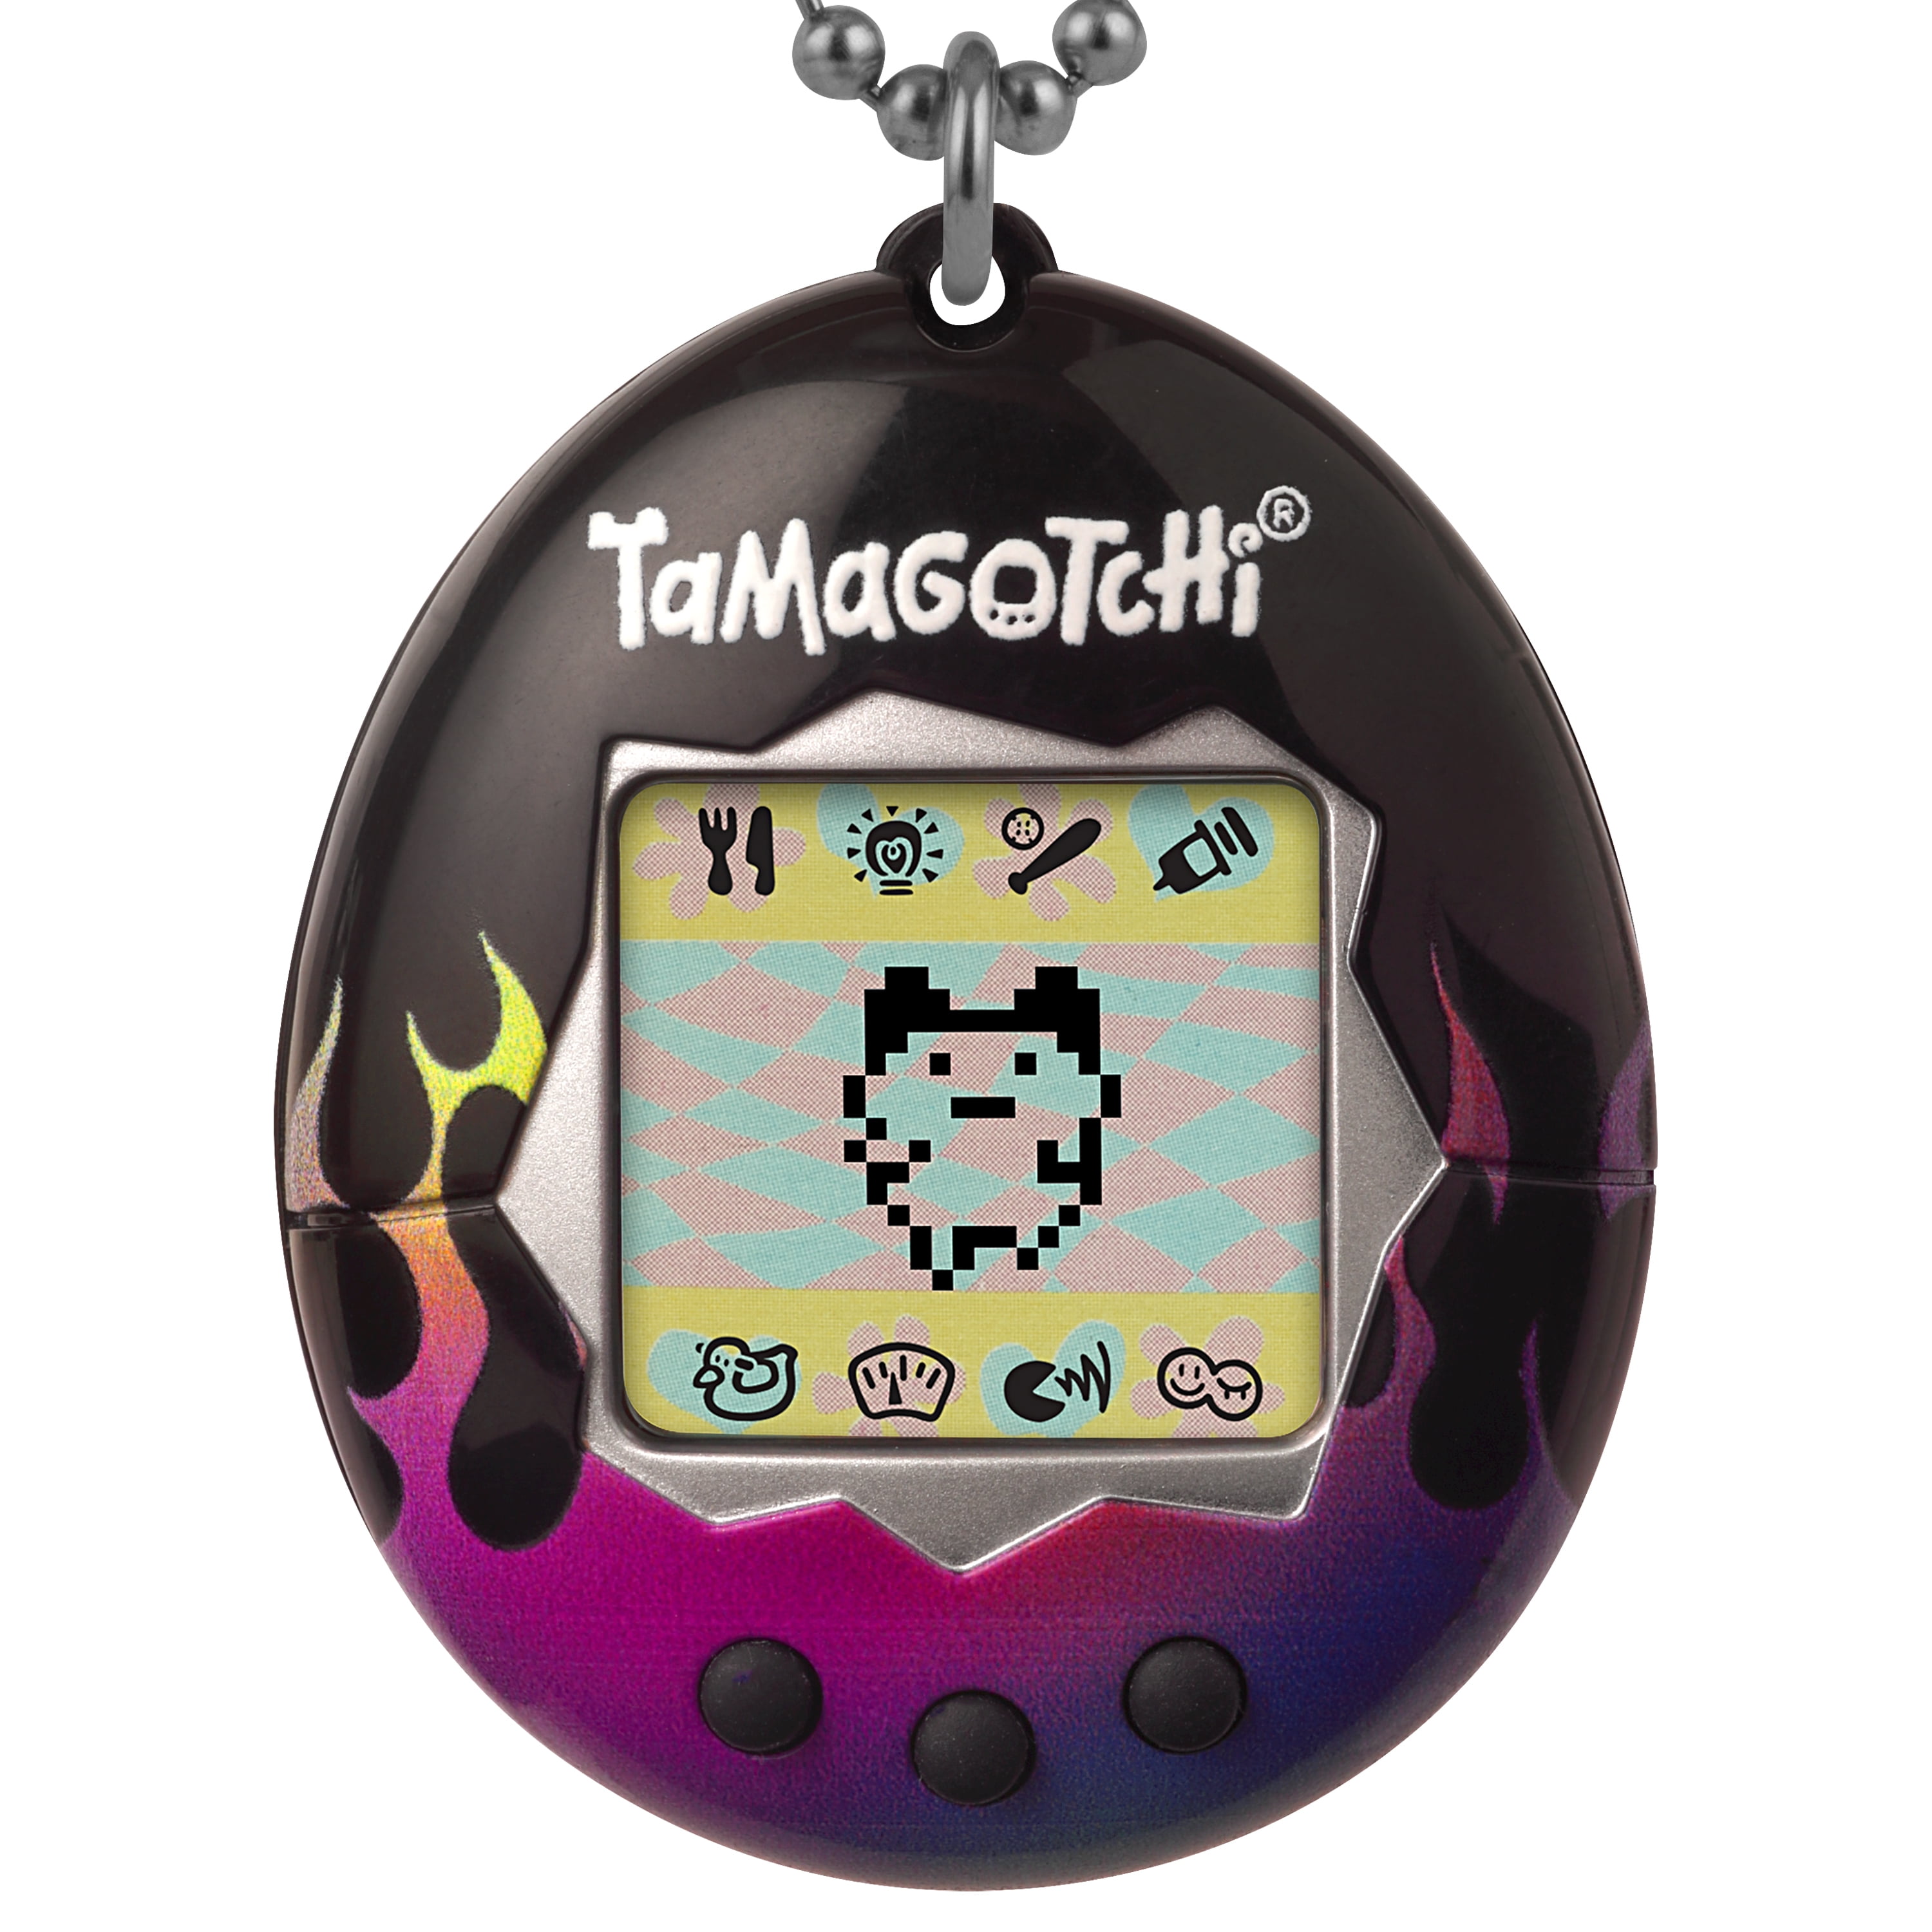 Classico Tamagotchi Virtual Pet con Flame Design Italy